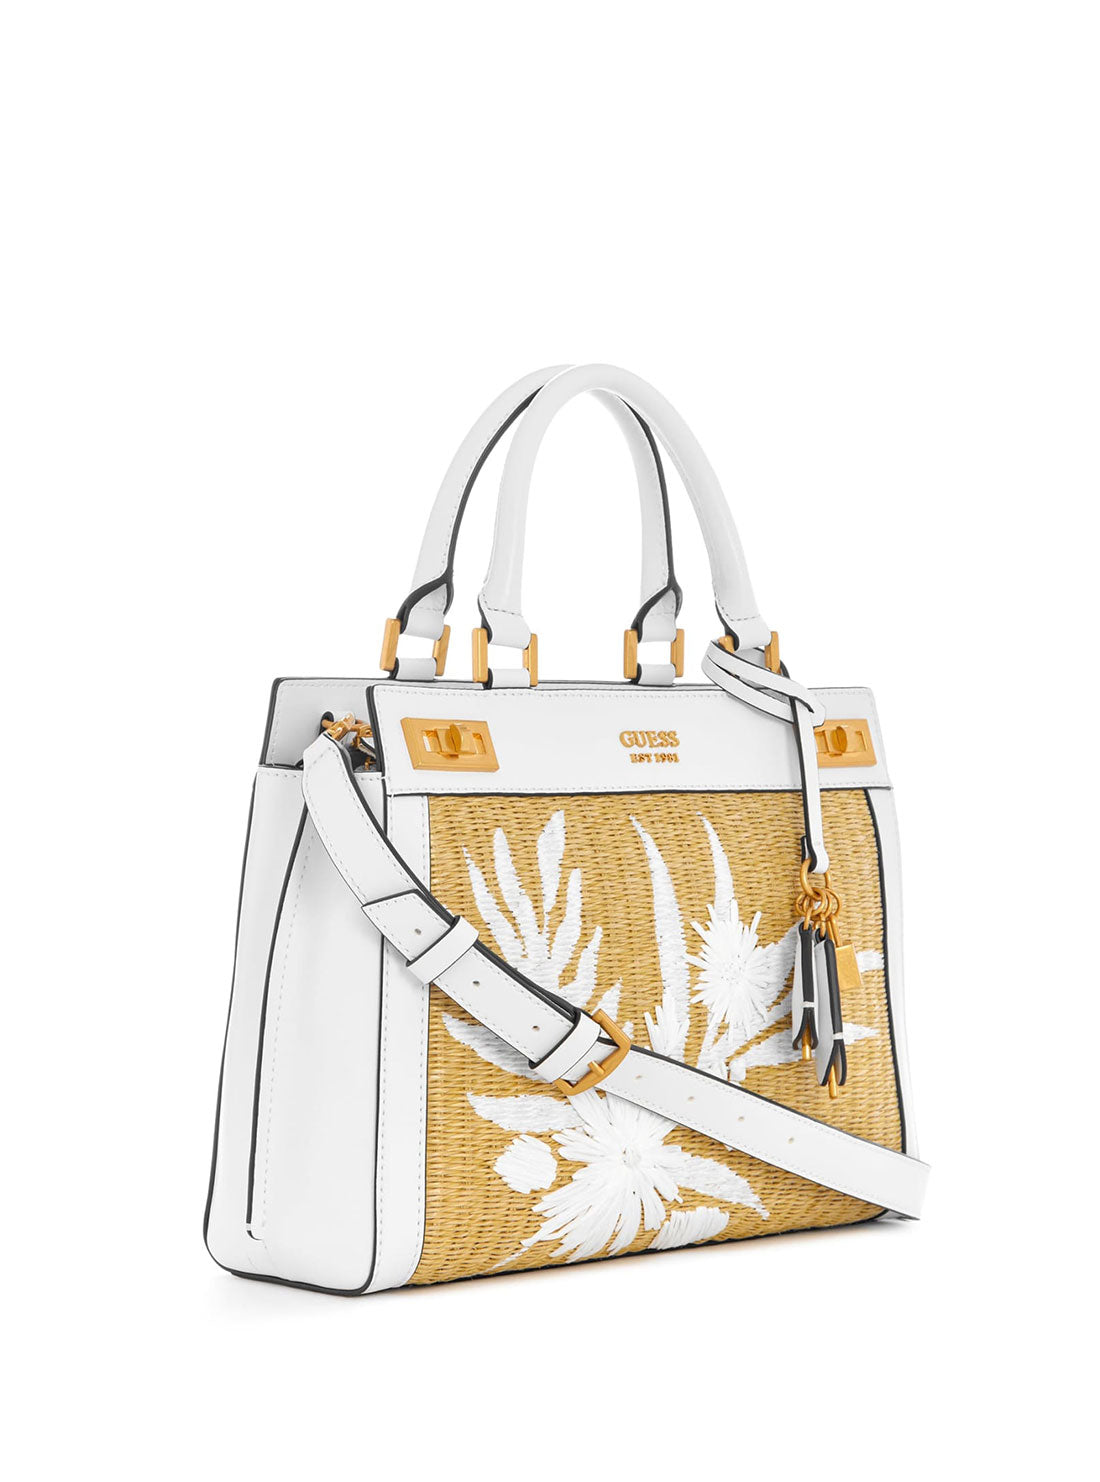 GUESS Women's White Palm Katey Luxury Satchel Bag WA787026 Front Side View